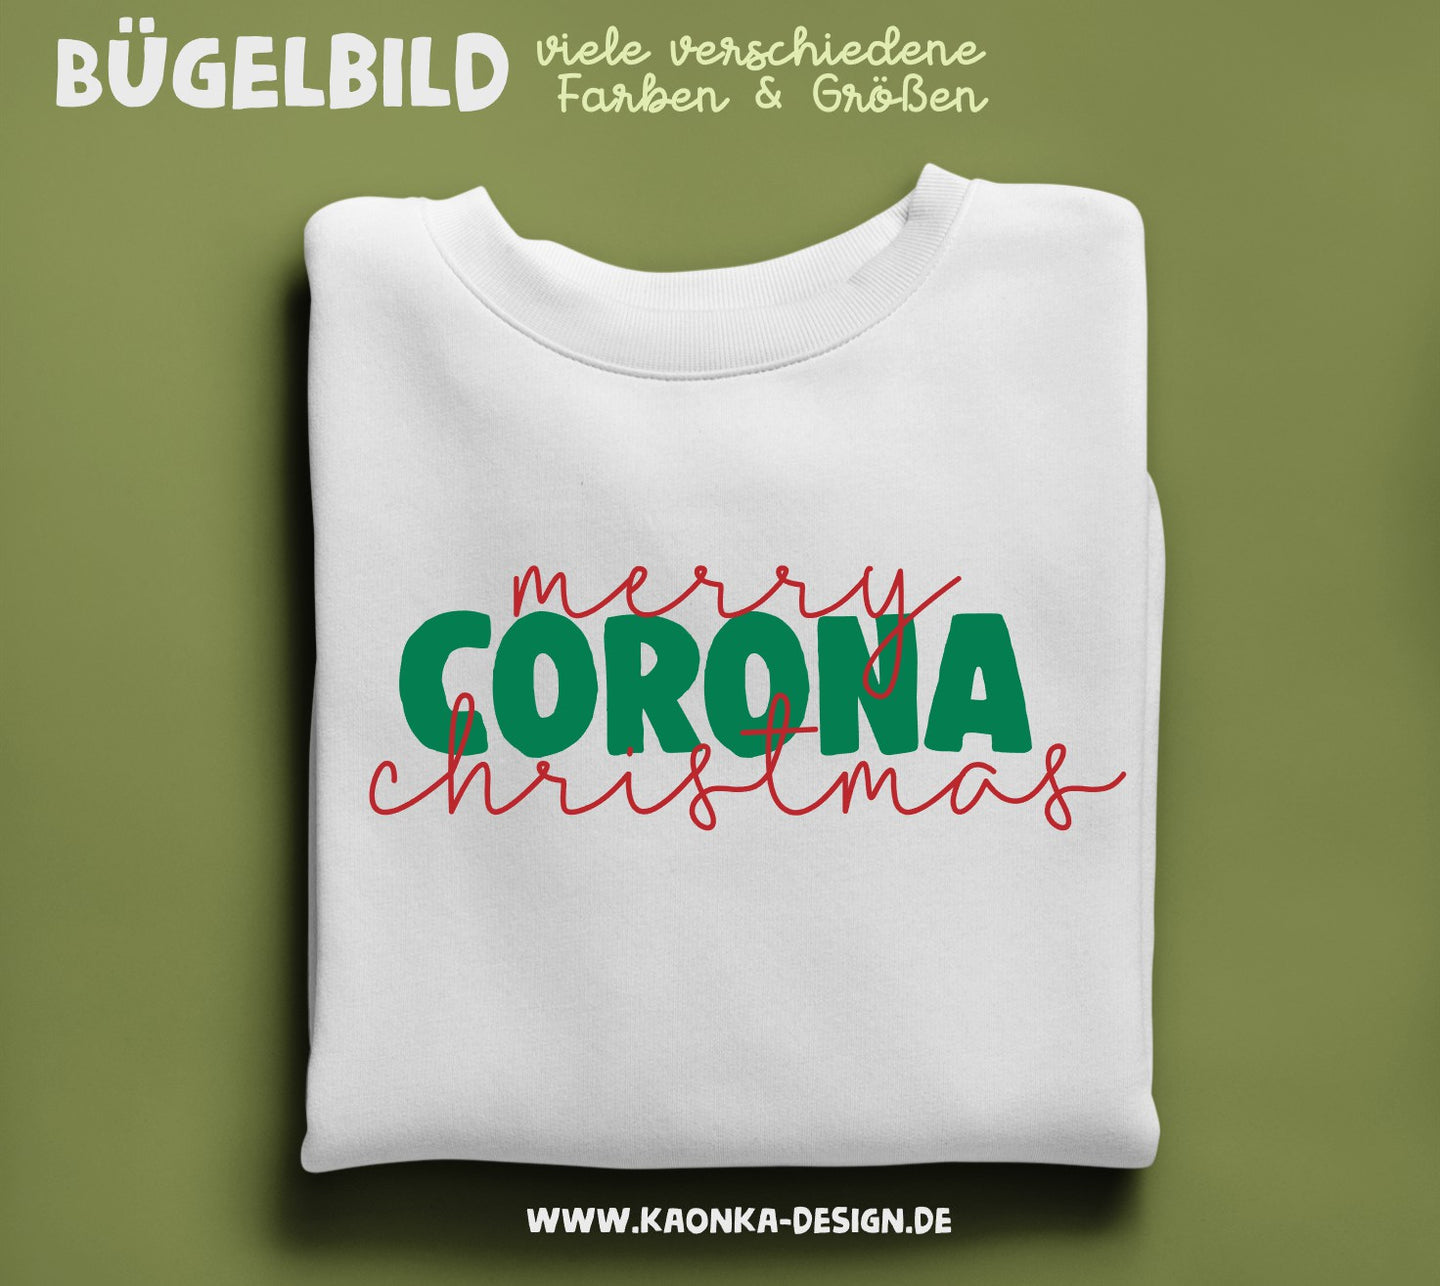 Bügelbild Merry Corona Christmas